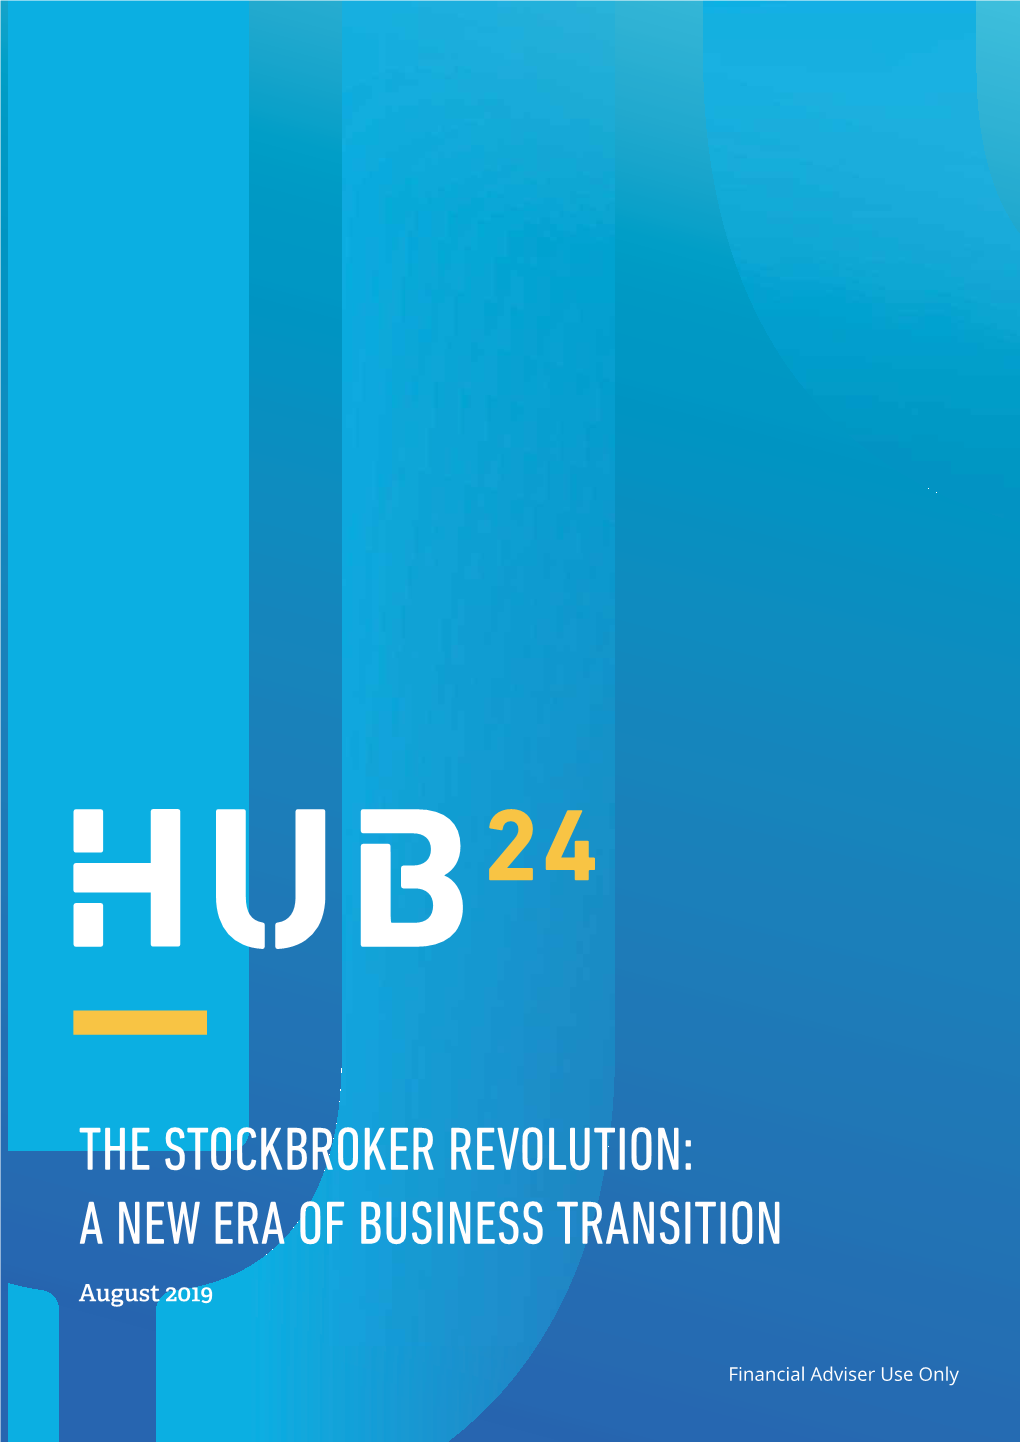 The Stockbroker Revolution: a New Era of Business Transition